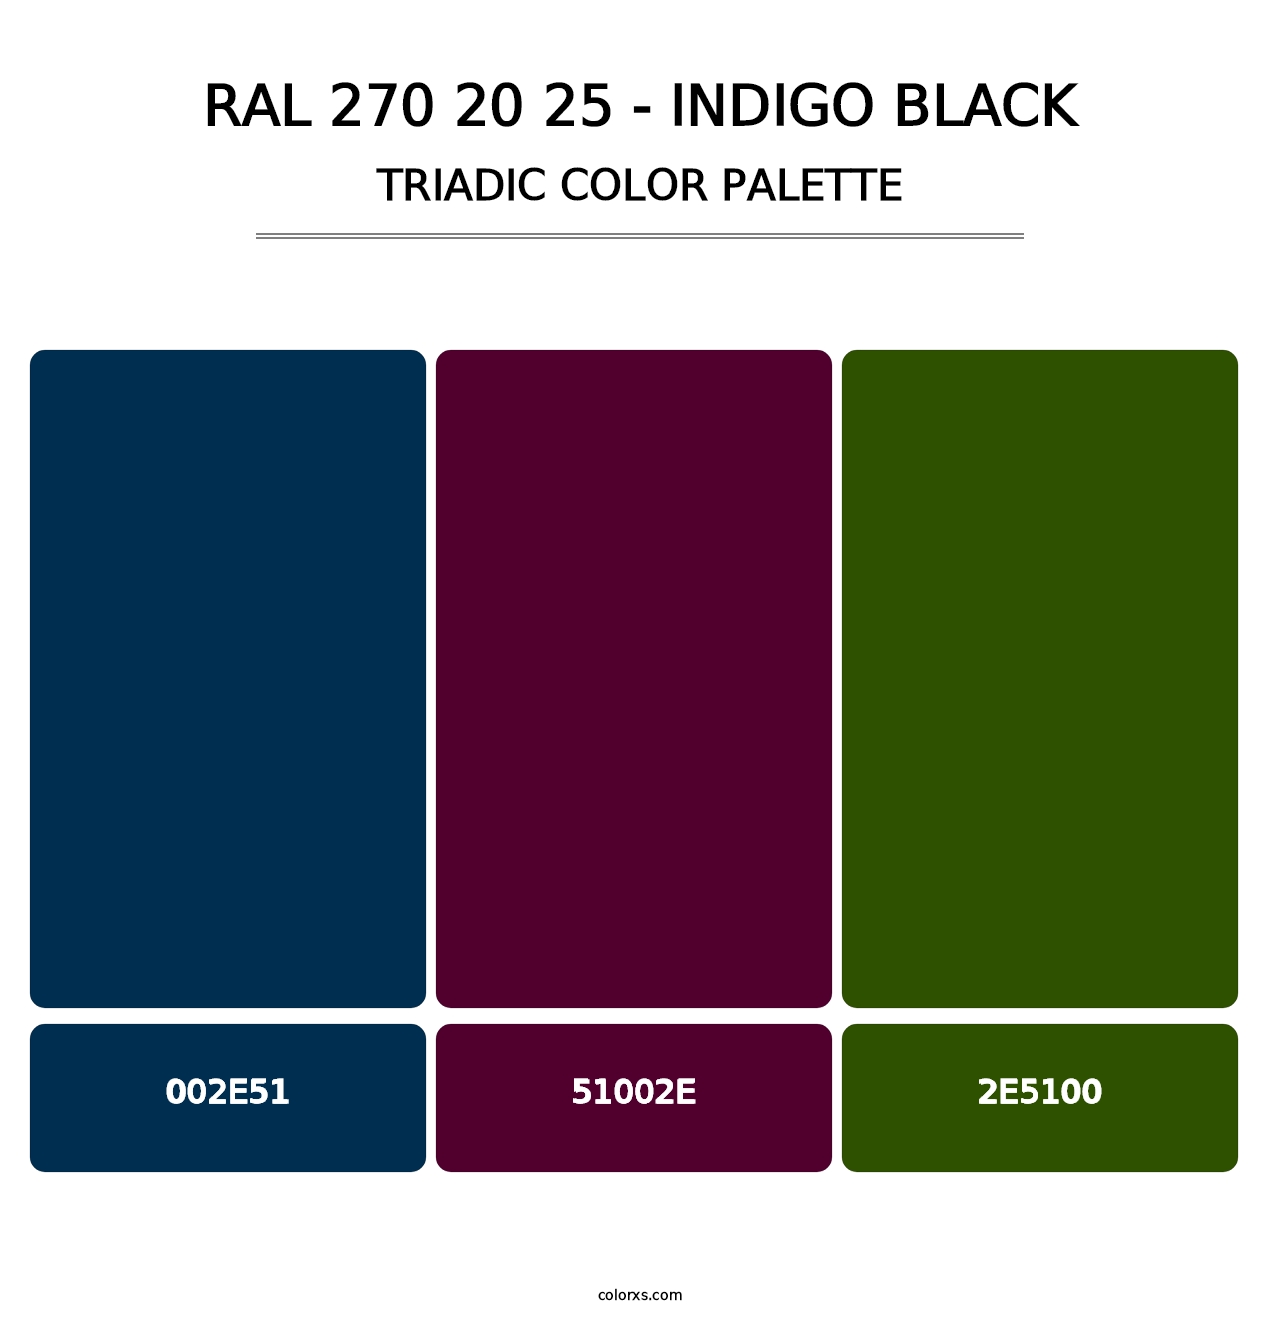 RAL 270 20 25 - Indigo Black - Triadic Color Palette